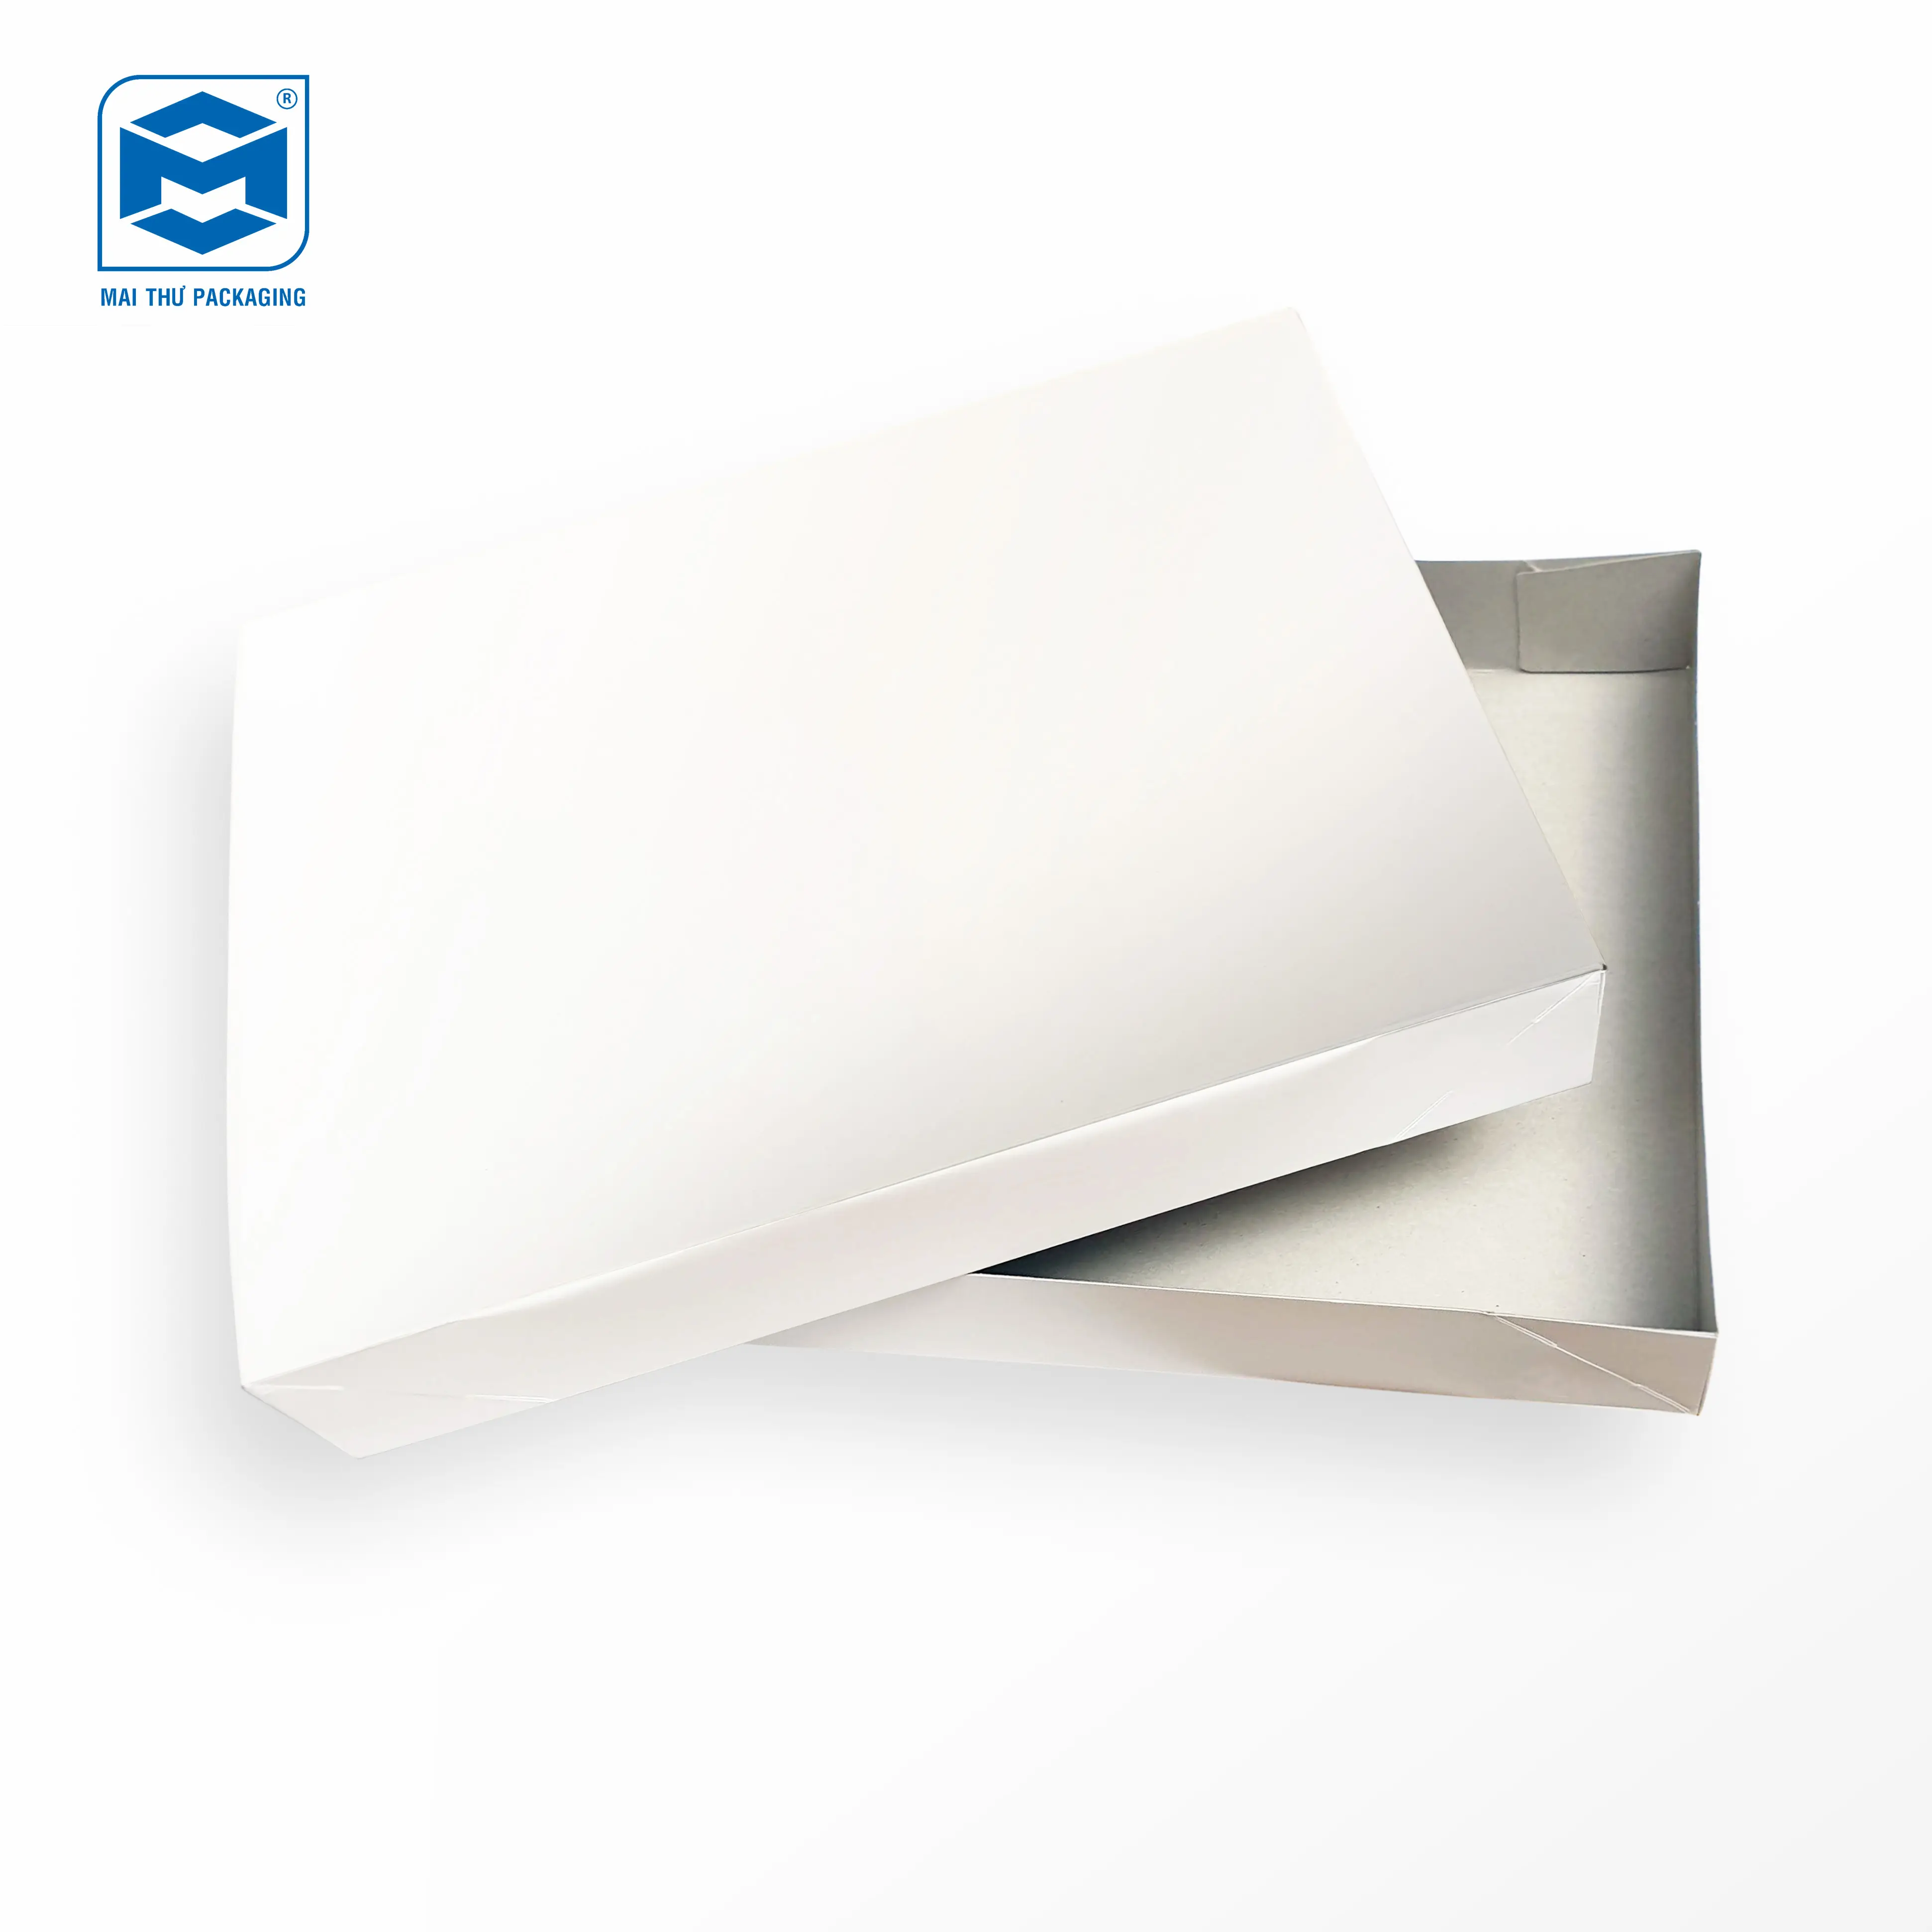 Manucfacturing कस्टम कागज उपहार बॉक्स डिजाइन